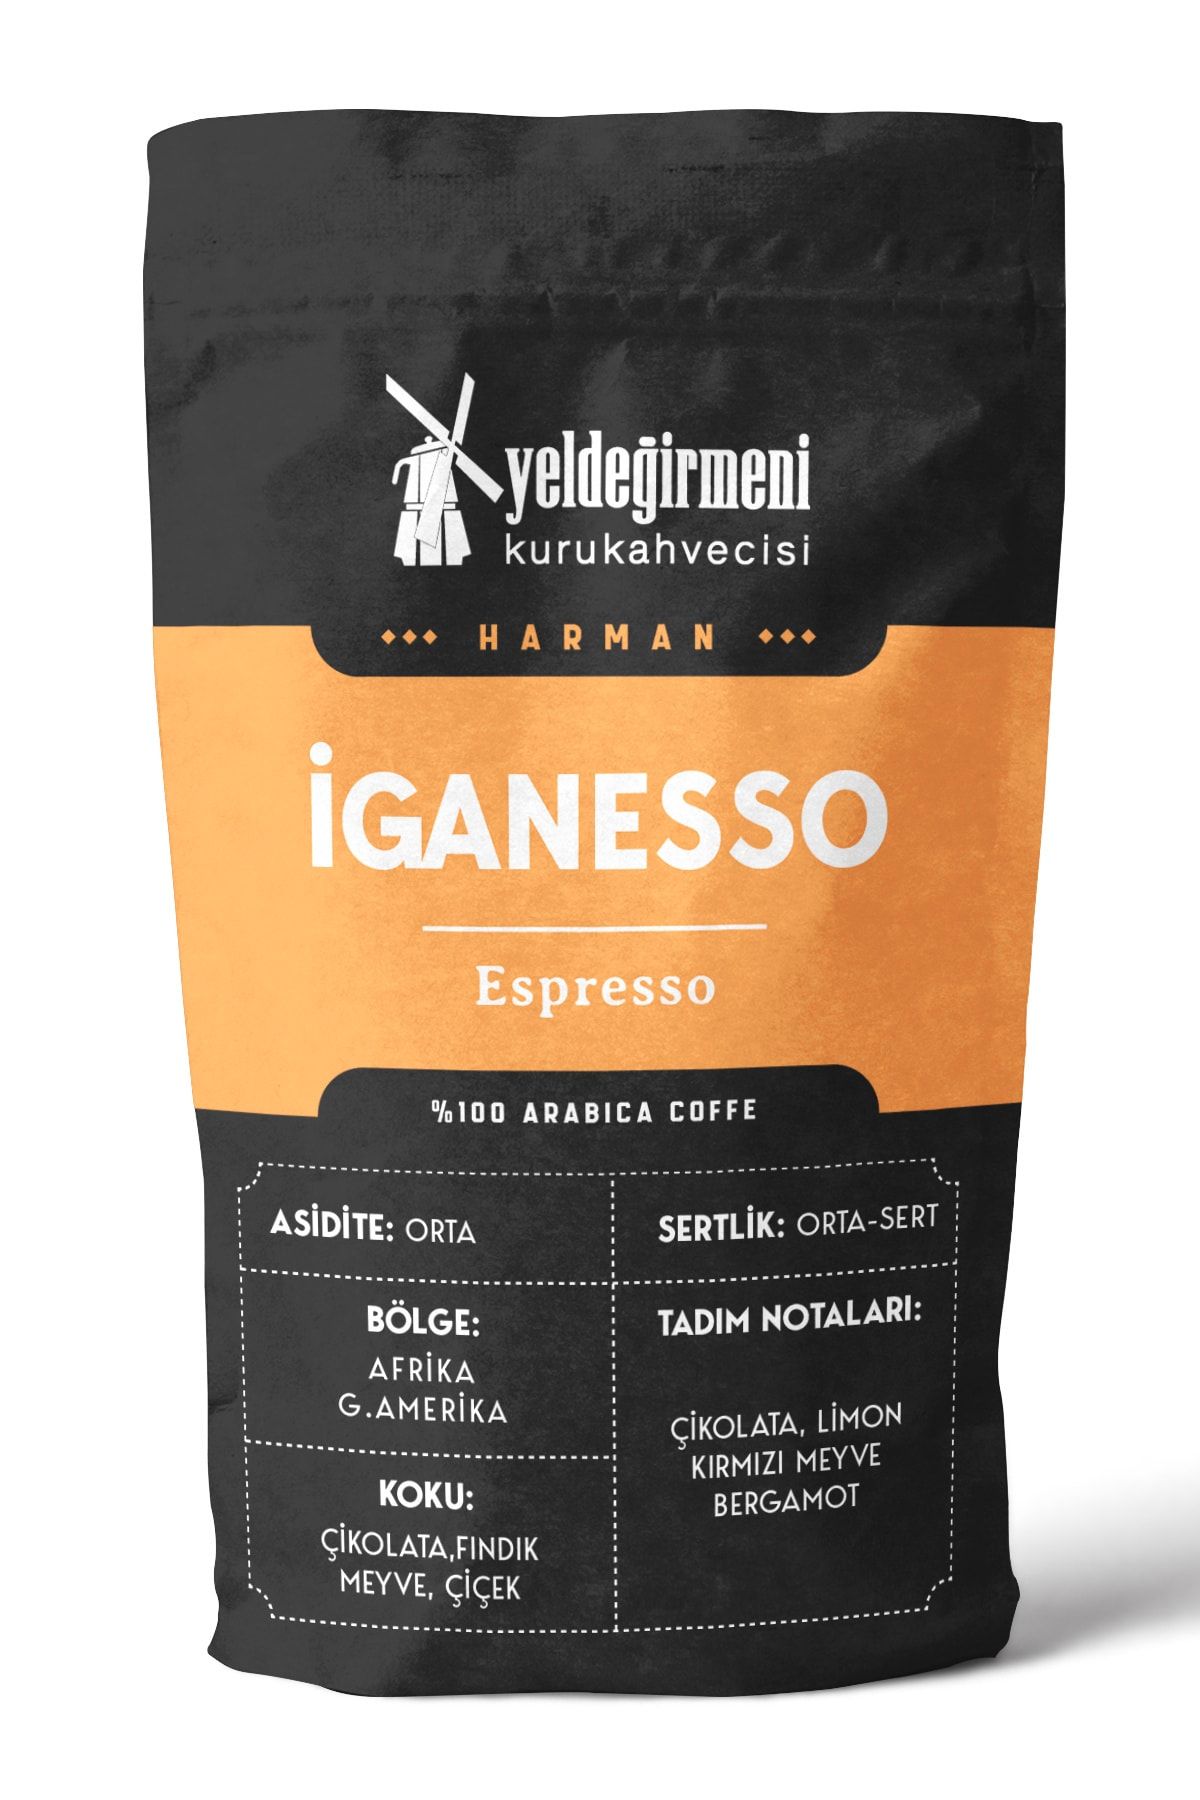 Yeldeğirmeni Kurukahvecisi Iganesso Espresso Kahve 500 gr